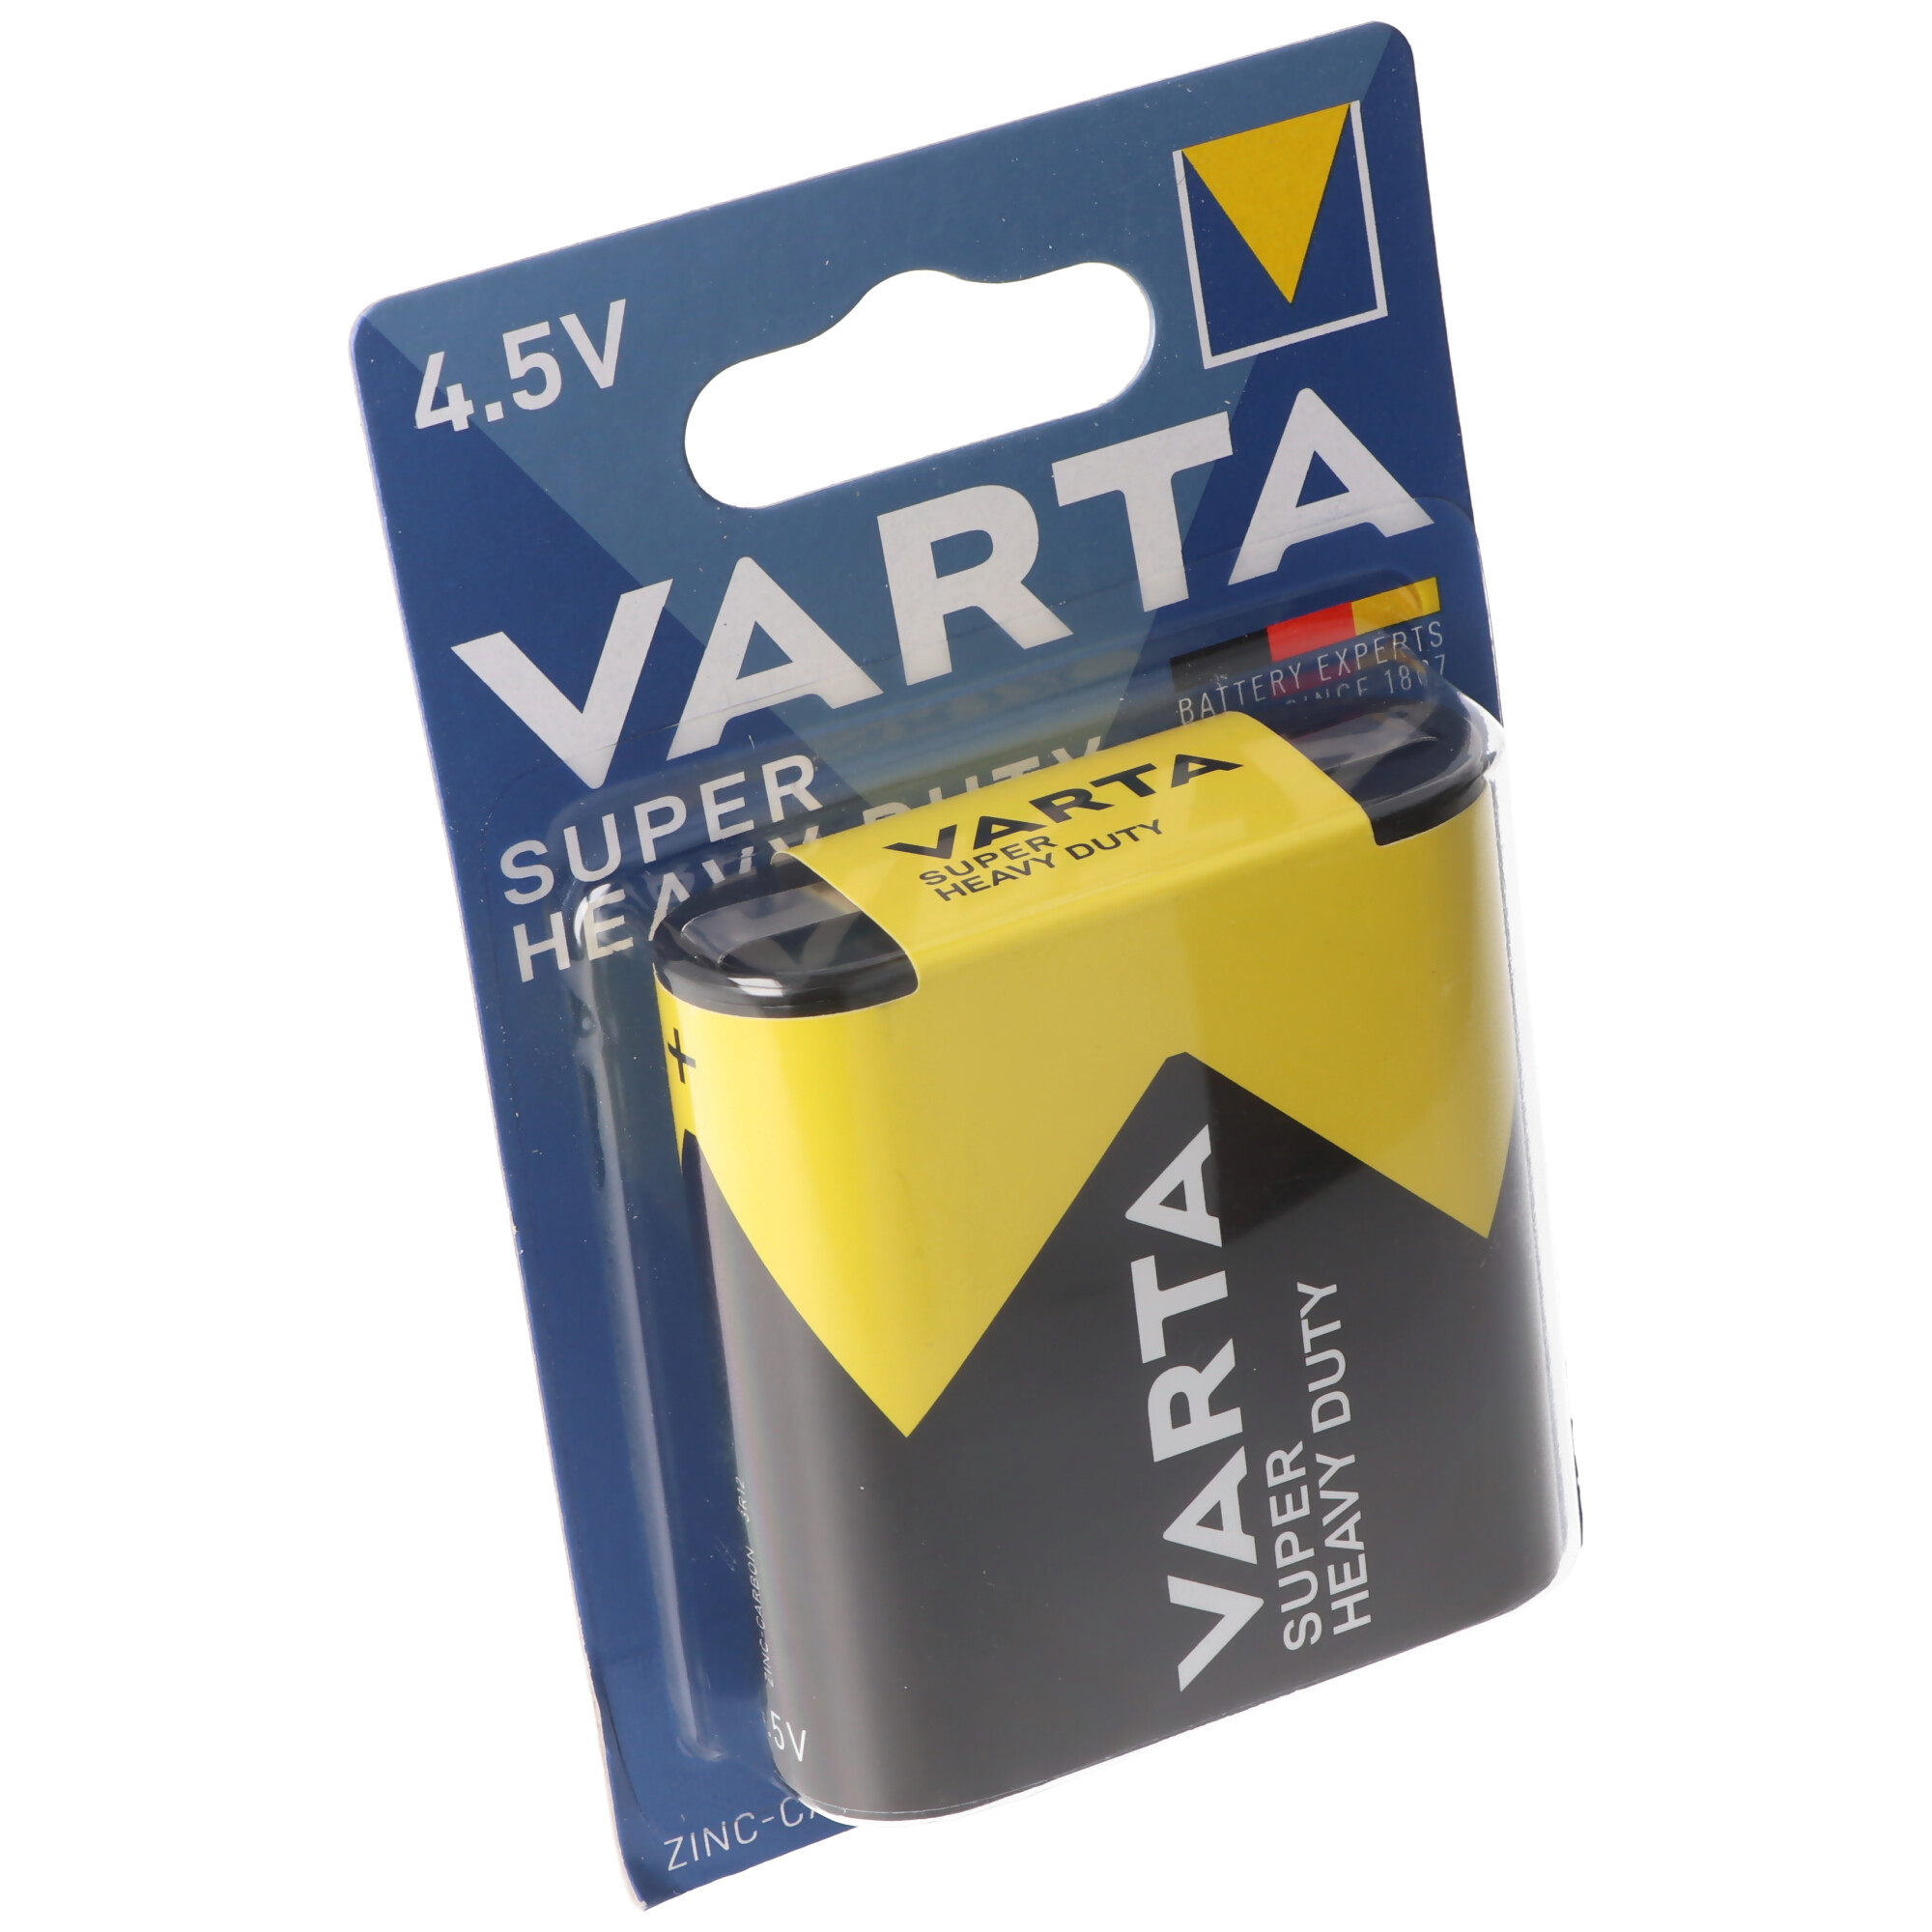 Varta Superlife 4,5 Volt 3012 Batterie normale 3R12, 3R12P Batterie plate, 4.5V 3R12 plat, Piles standard, Piles